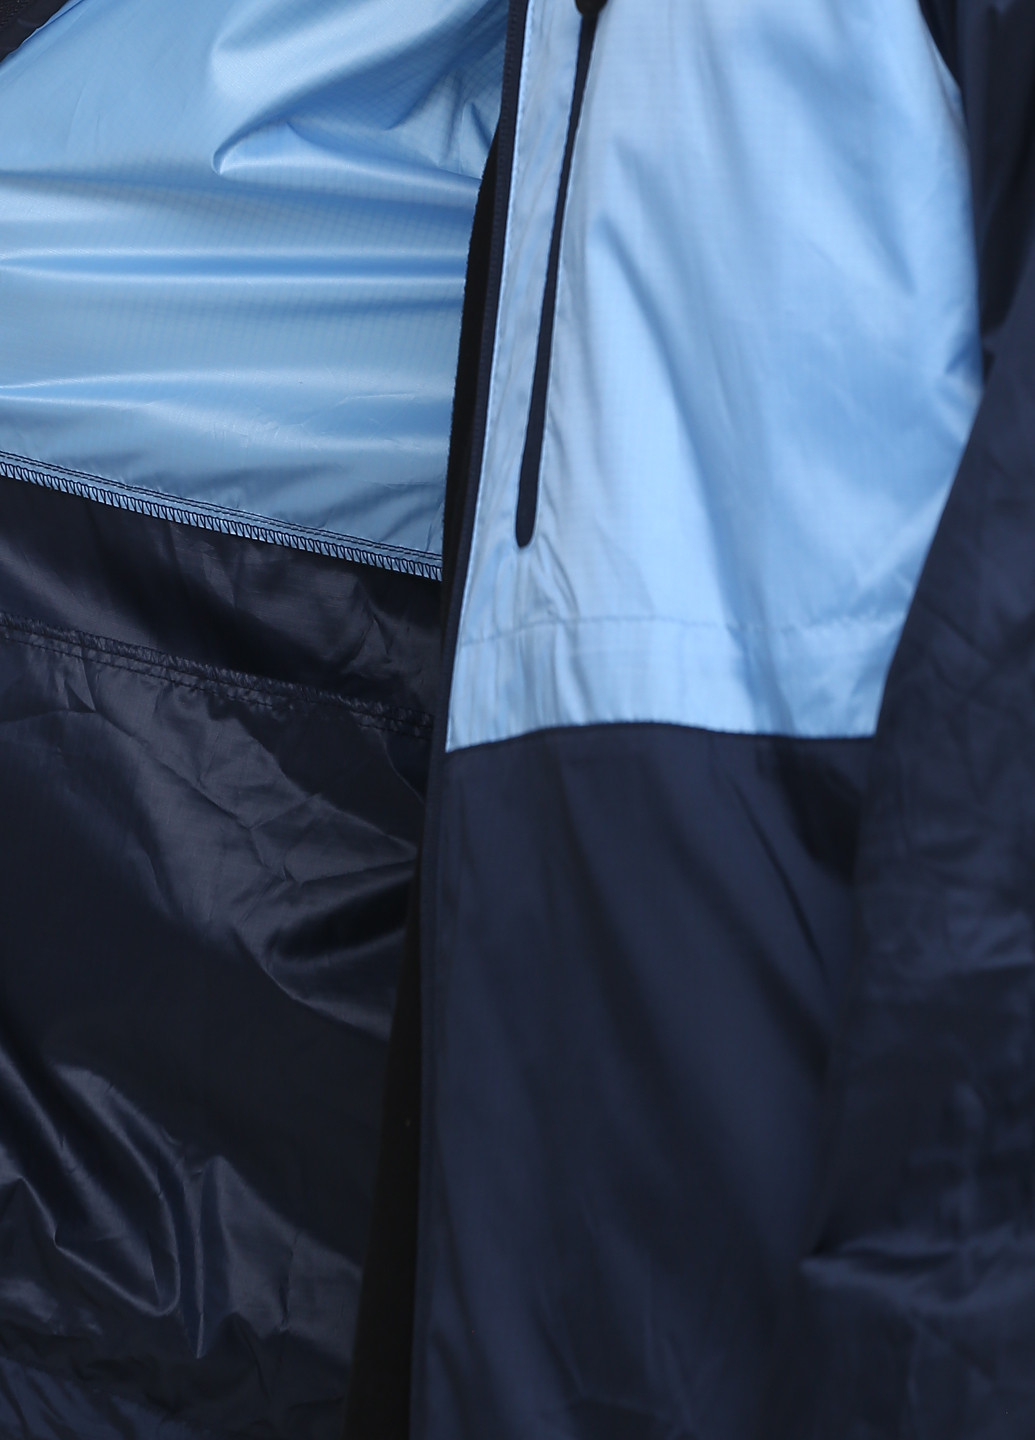 Темно-синяя демисезонная ветровка Nike Manchester City Auth JKT